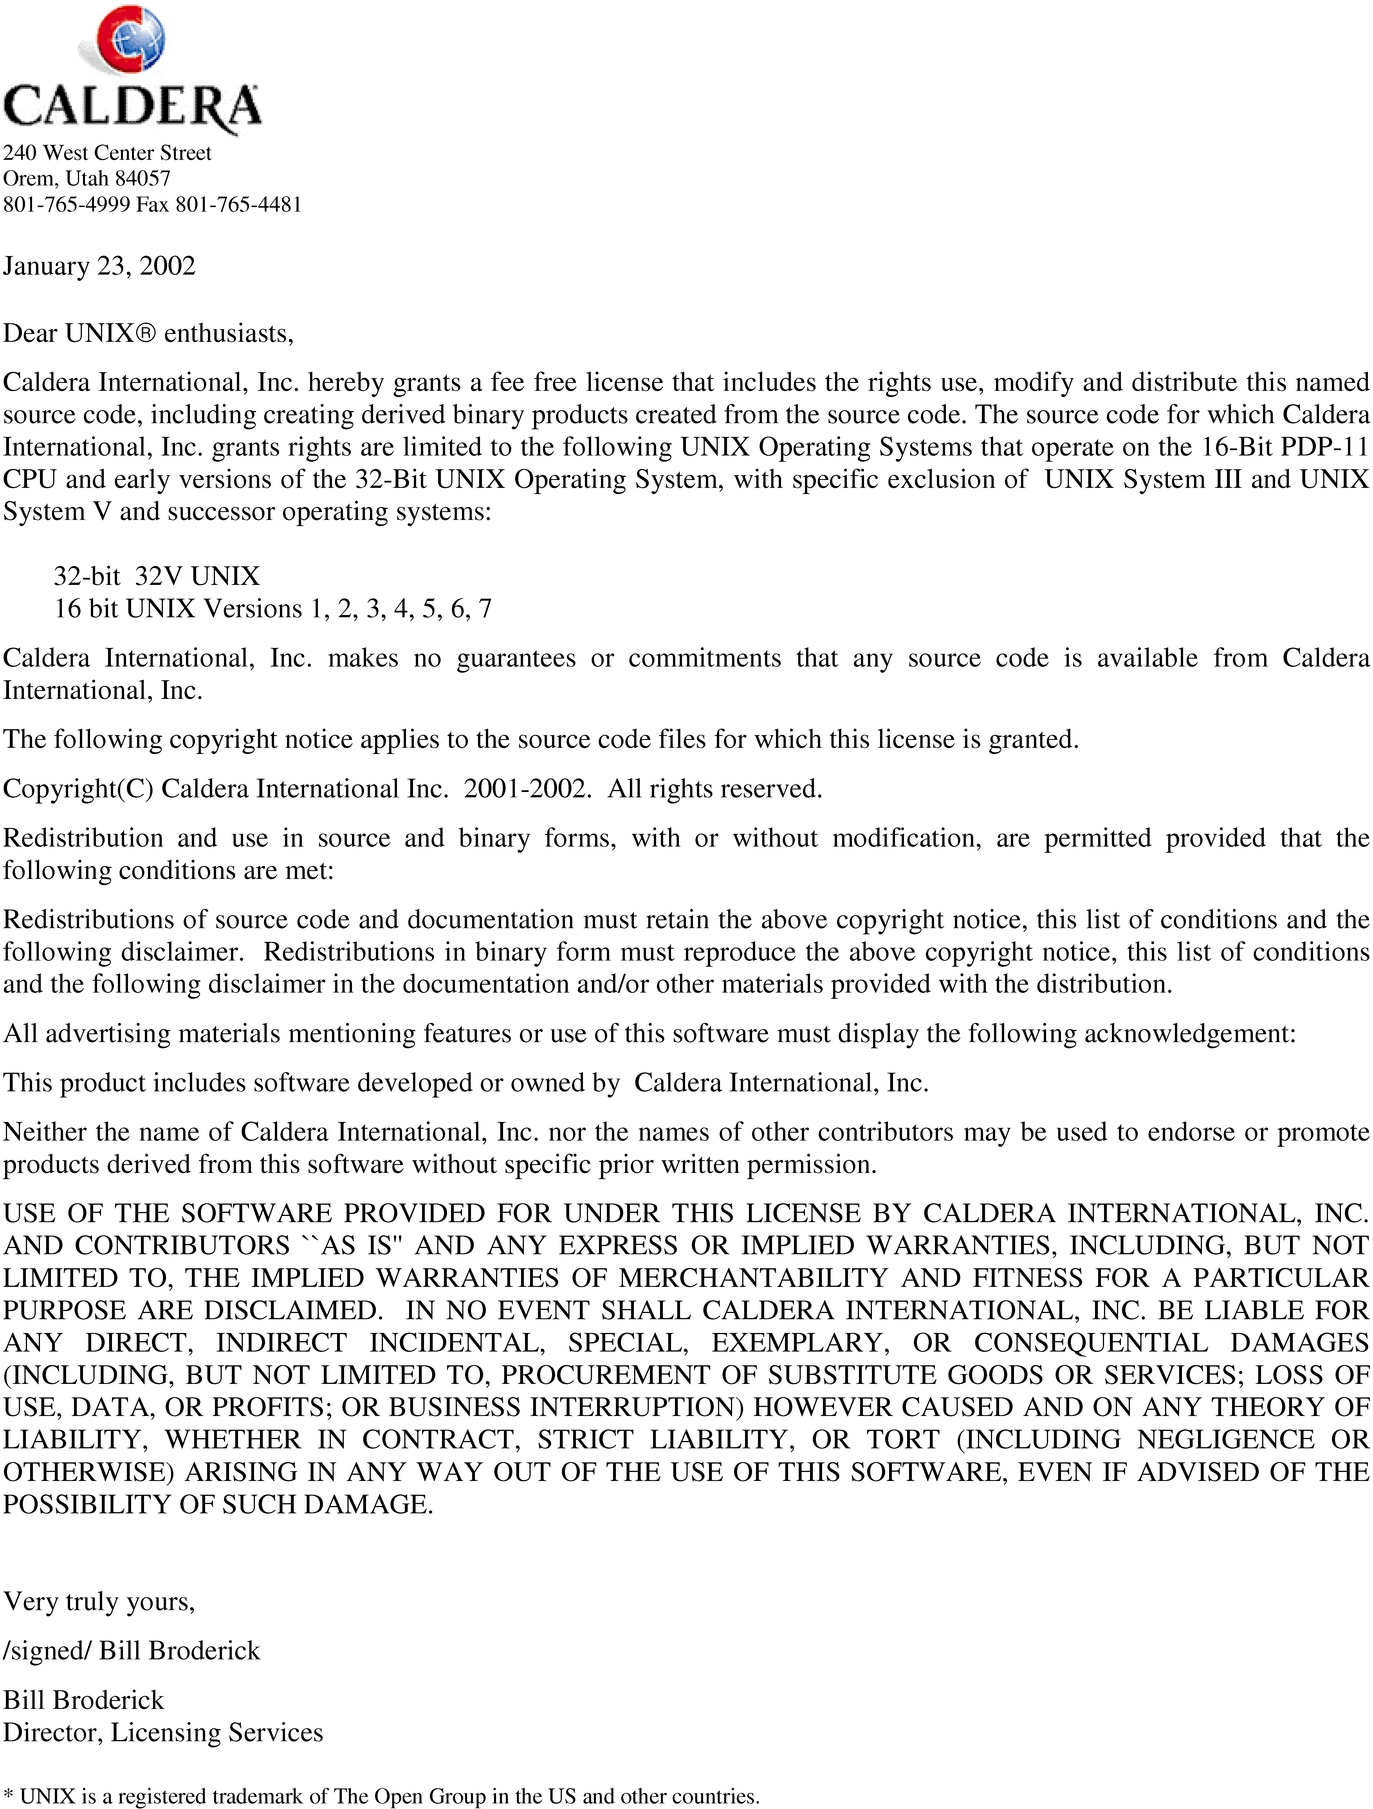 Caldera-license.pdf